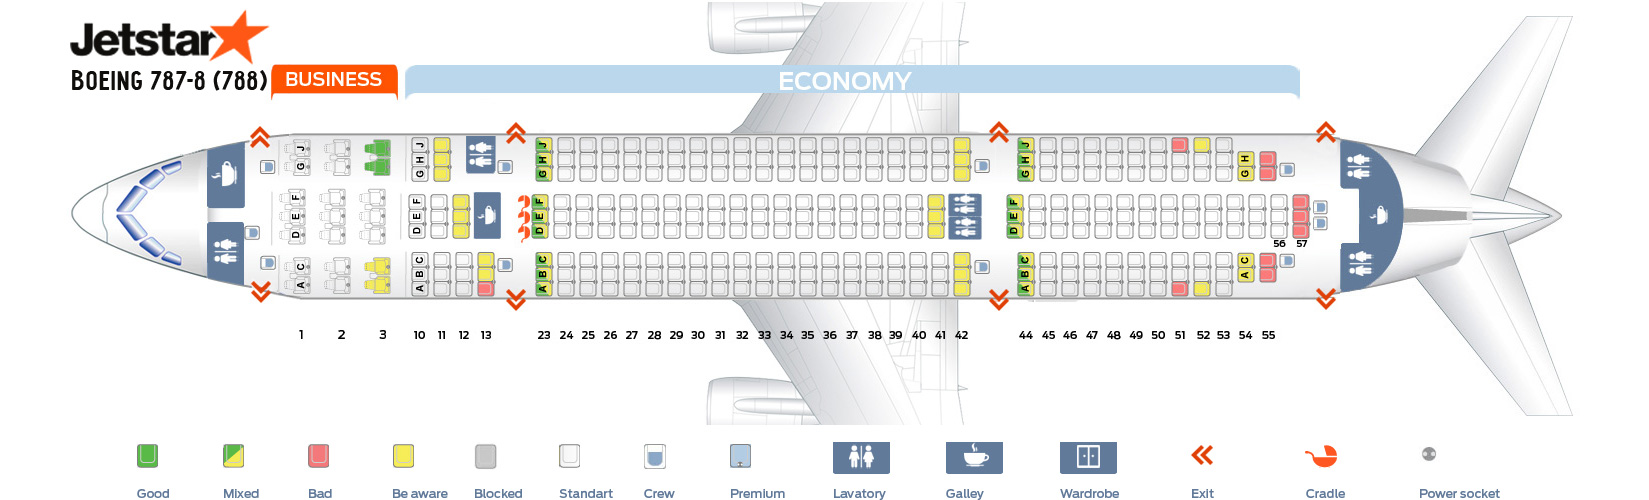 Boeing Dreamliner Seating Chart